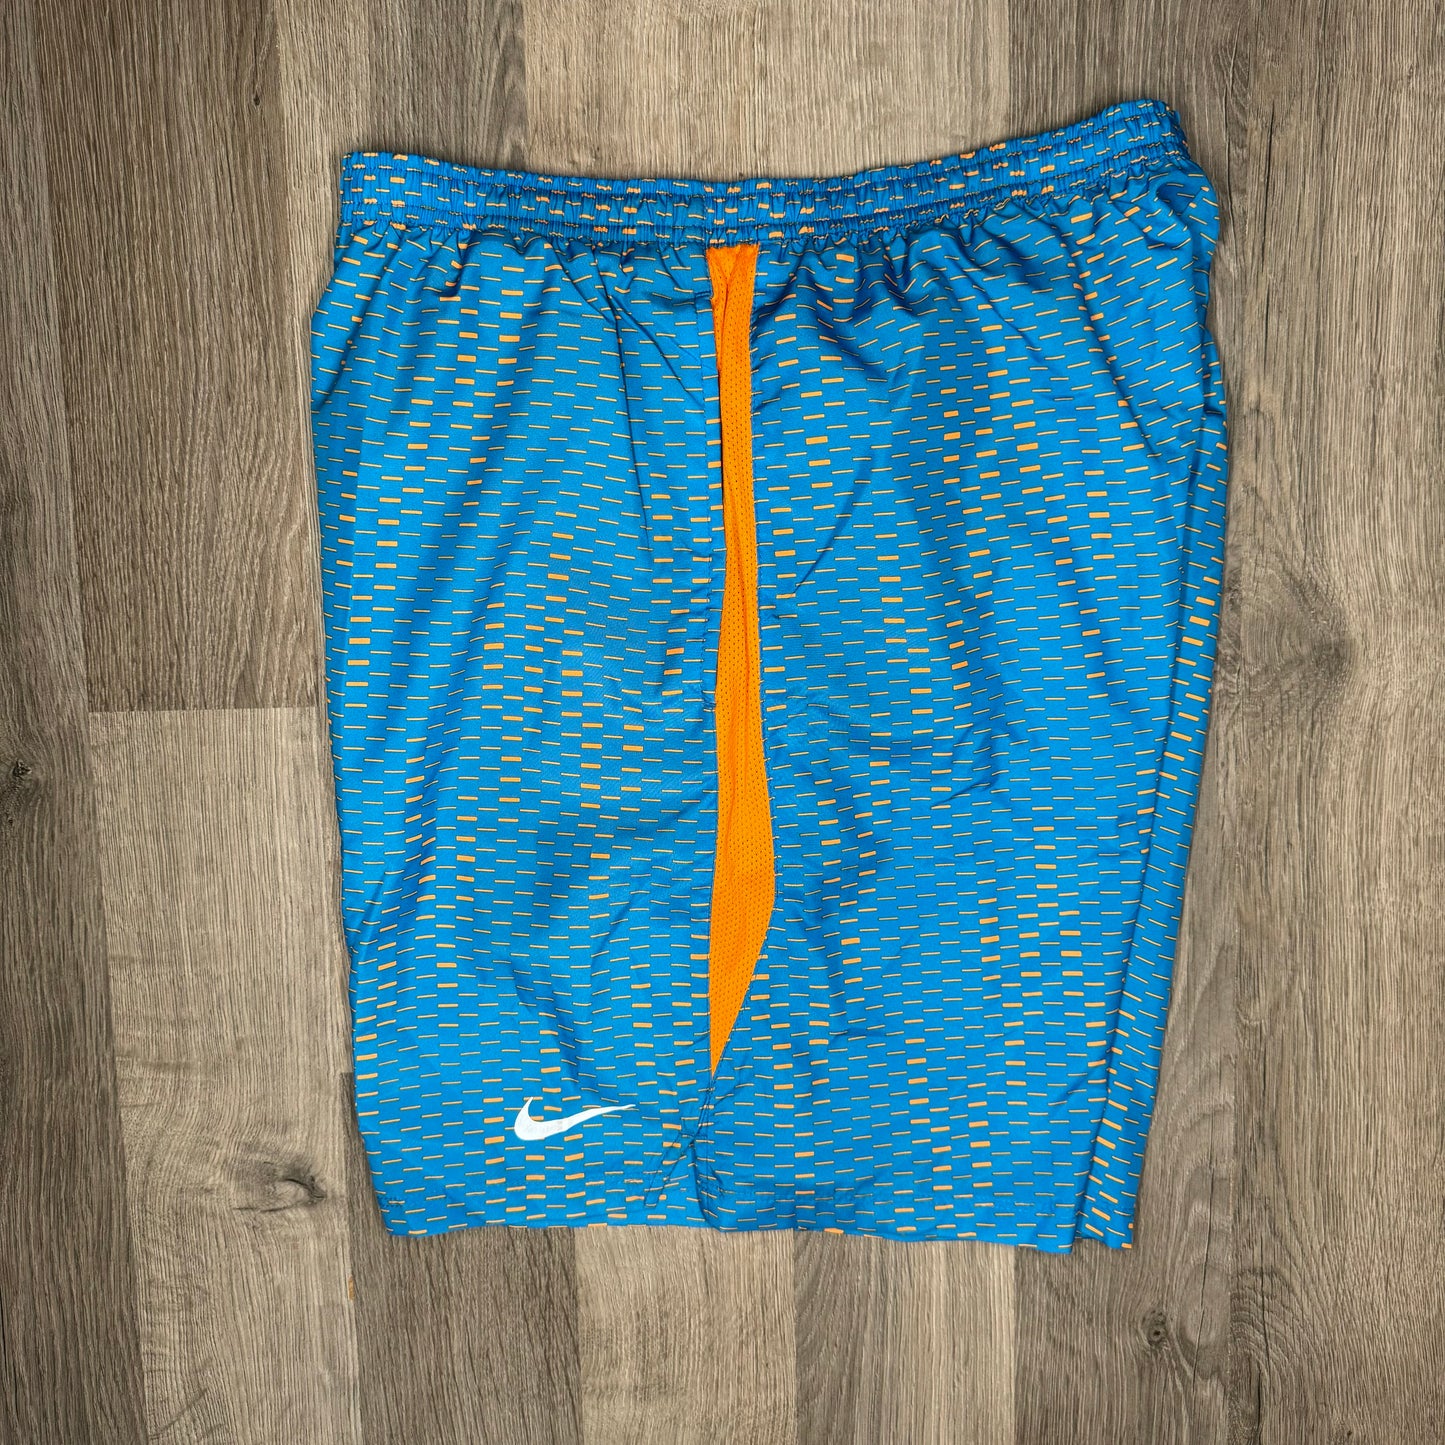 Nike Pattern Shorts Blue Orange